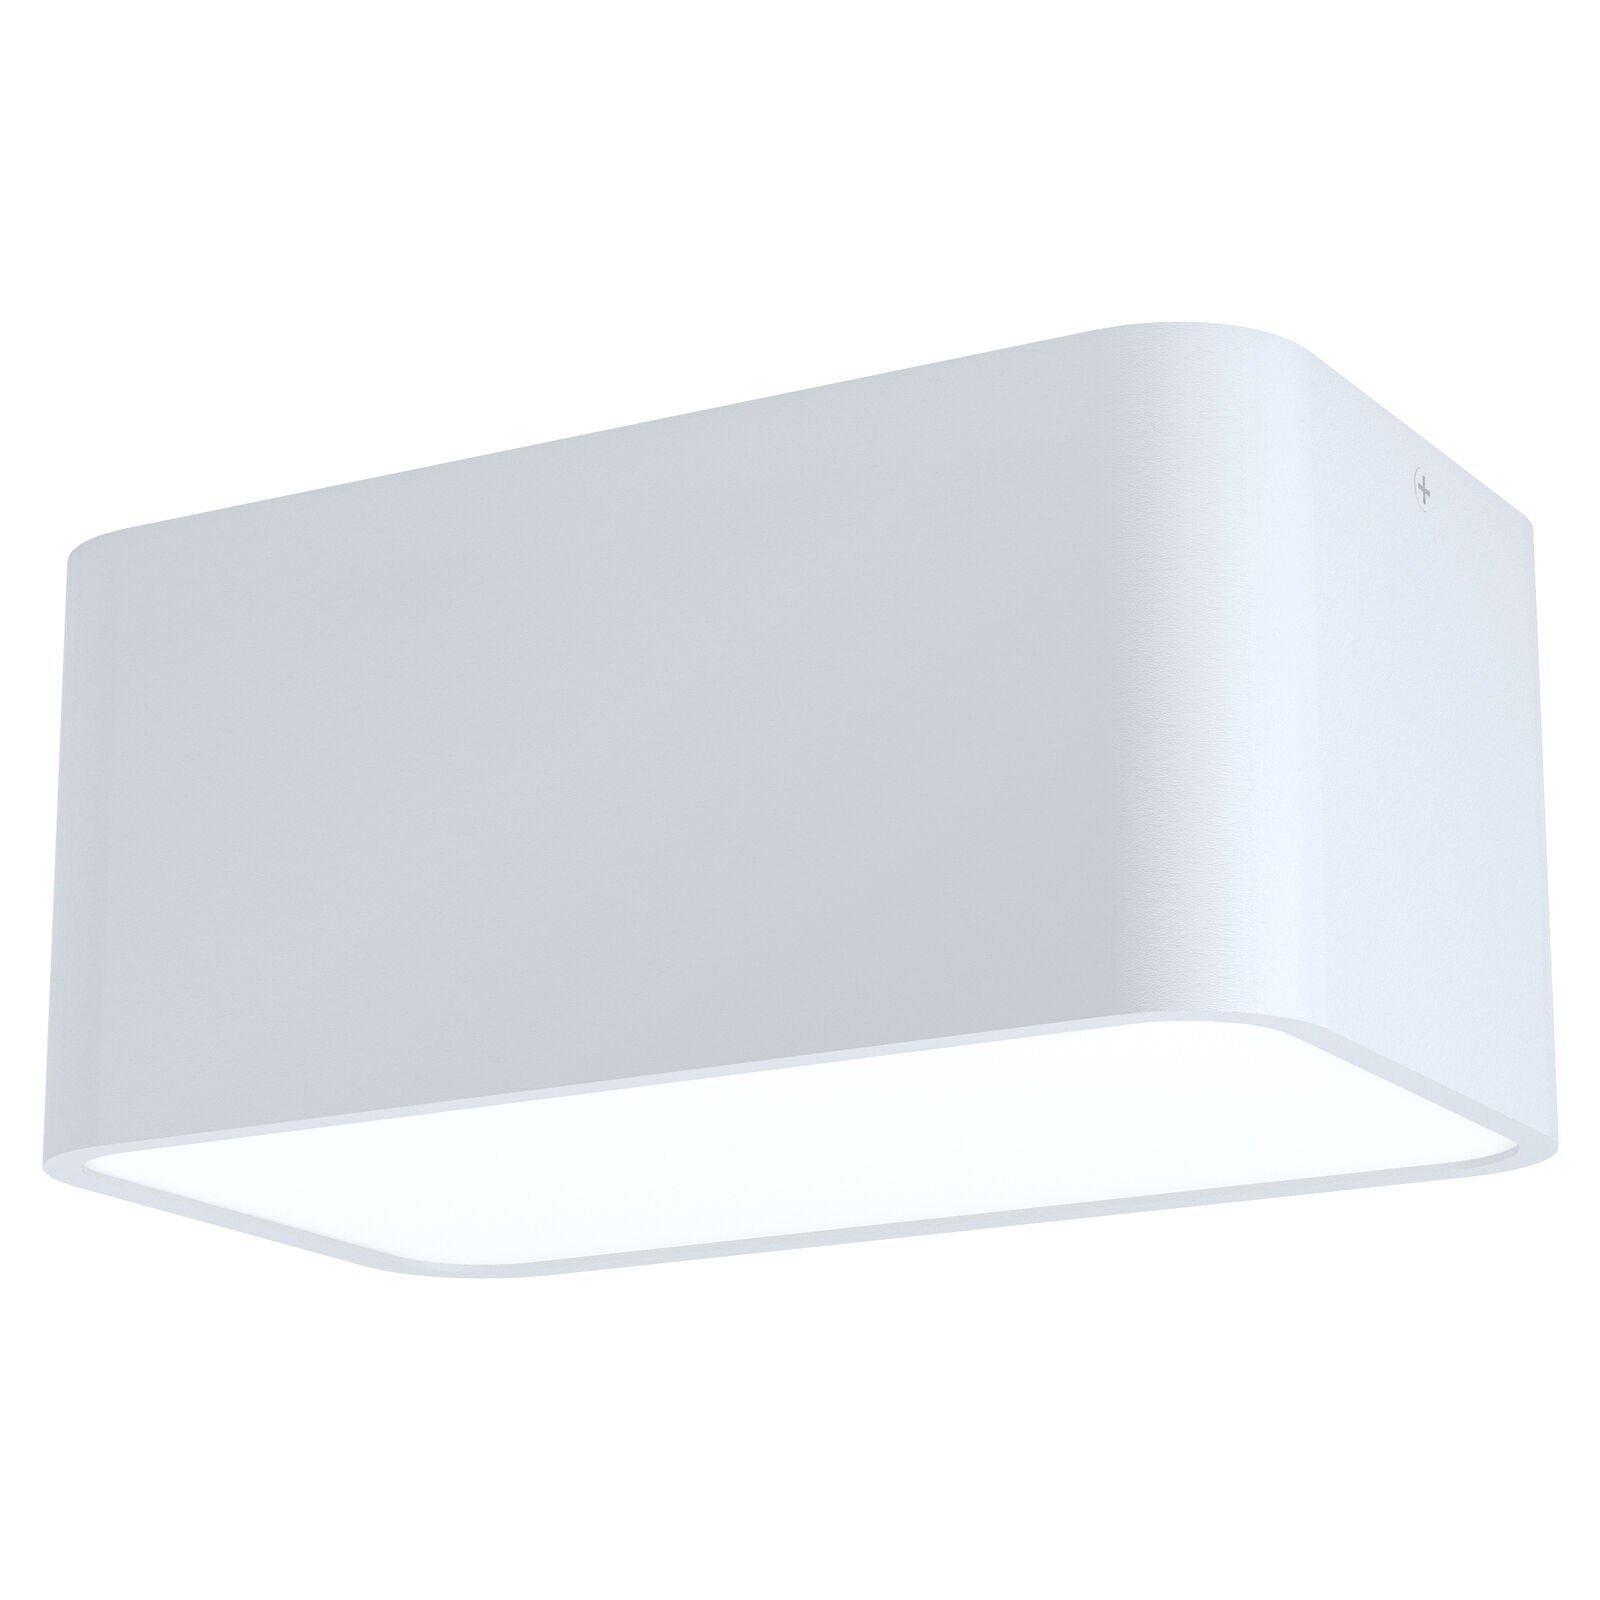 Wall / Ceiling Light White Aluminium Twin Downlight 1 x 28W E27 Bulb